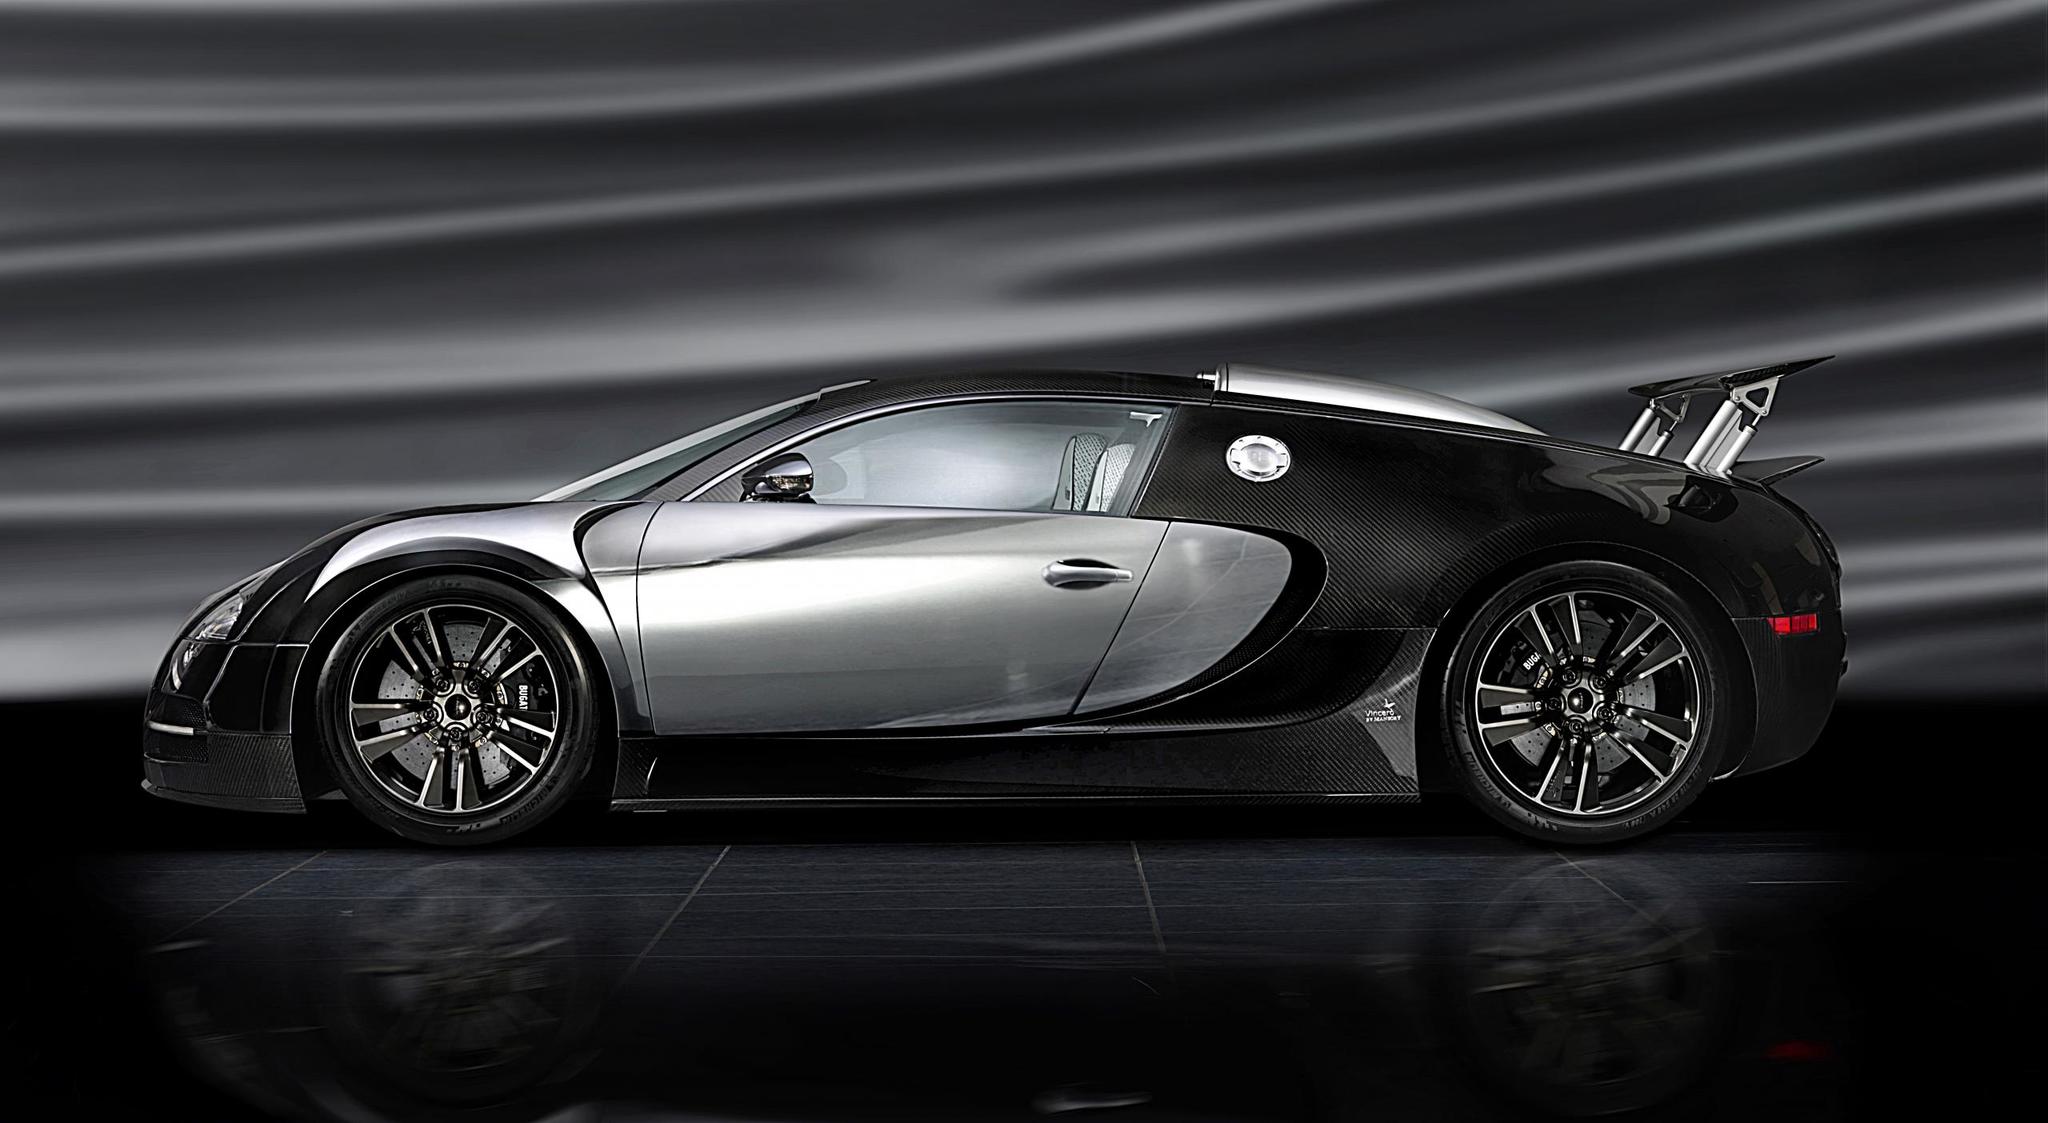 Mansory body kit for Bugatti Veyron carbon